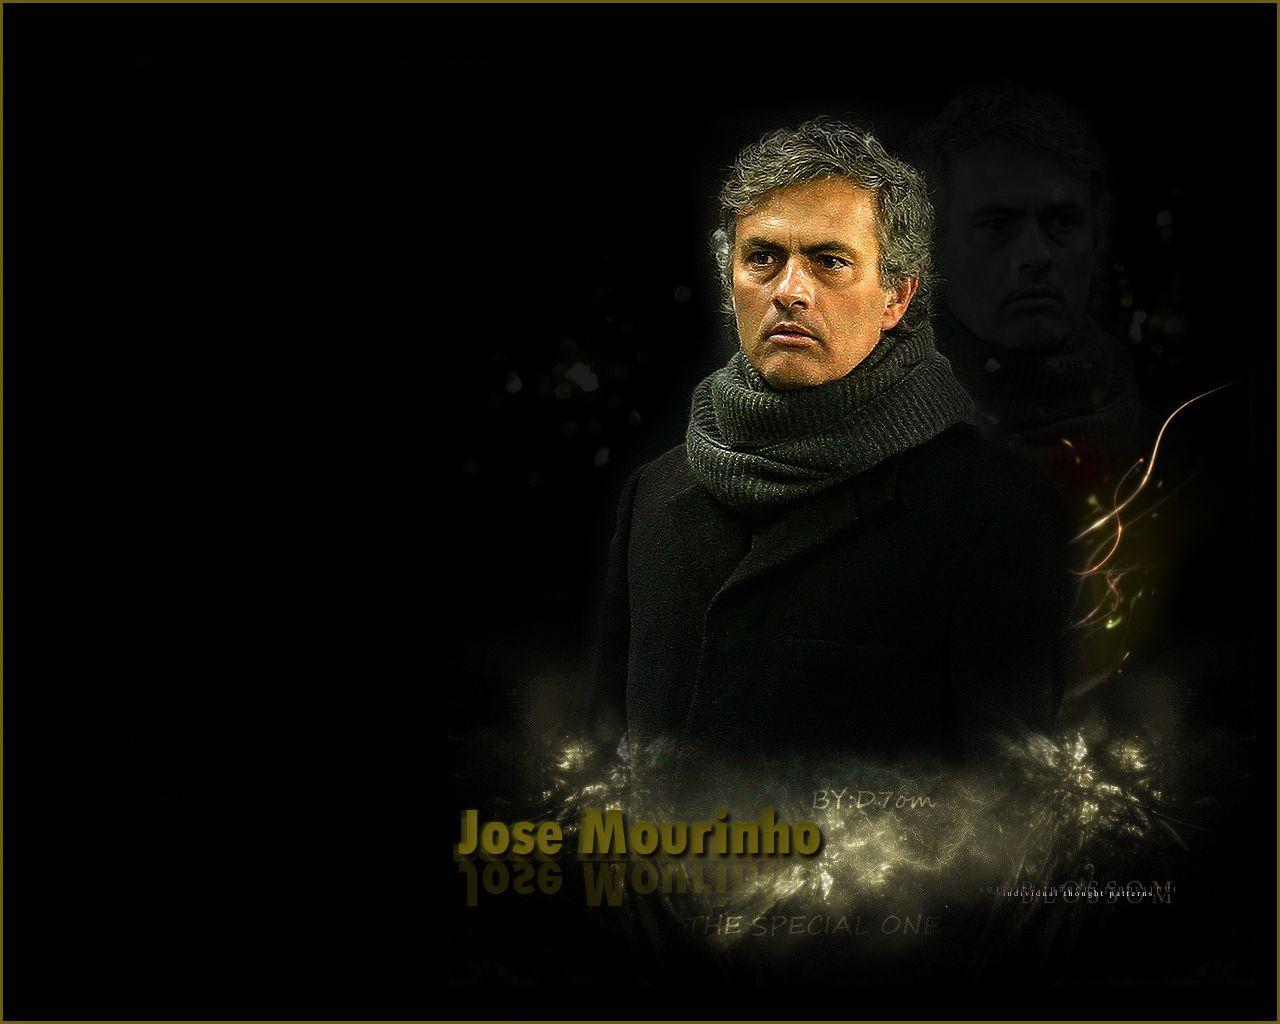 José Mourinho Wallpapers - Wallpaper Cave